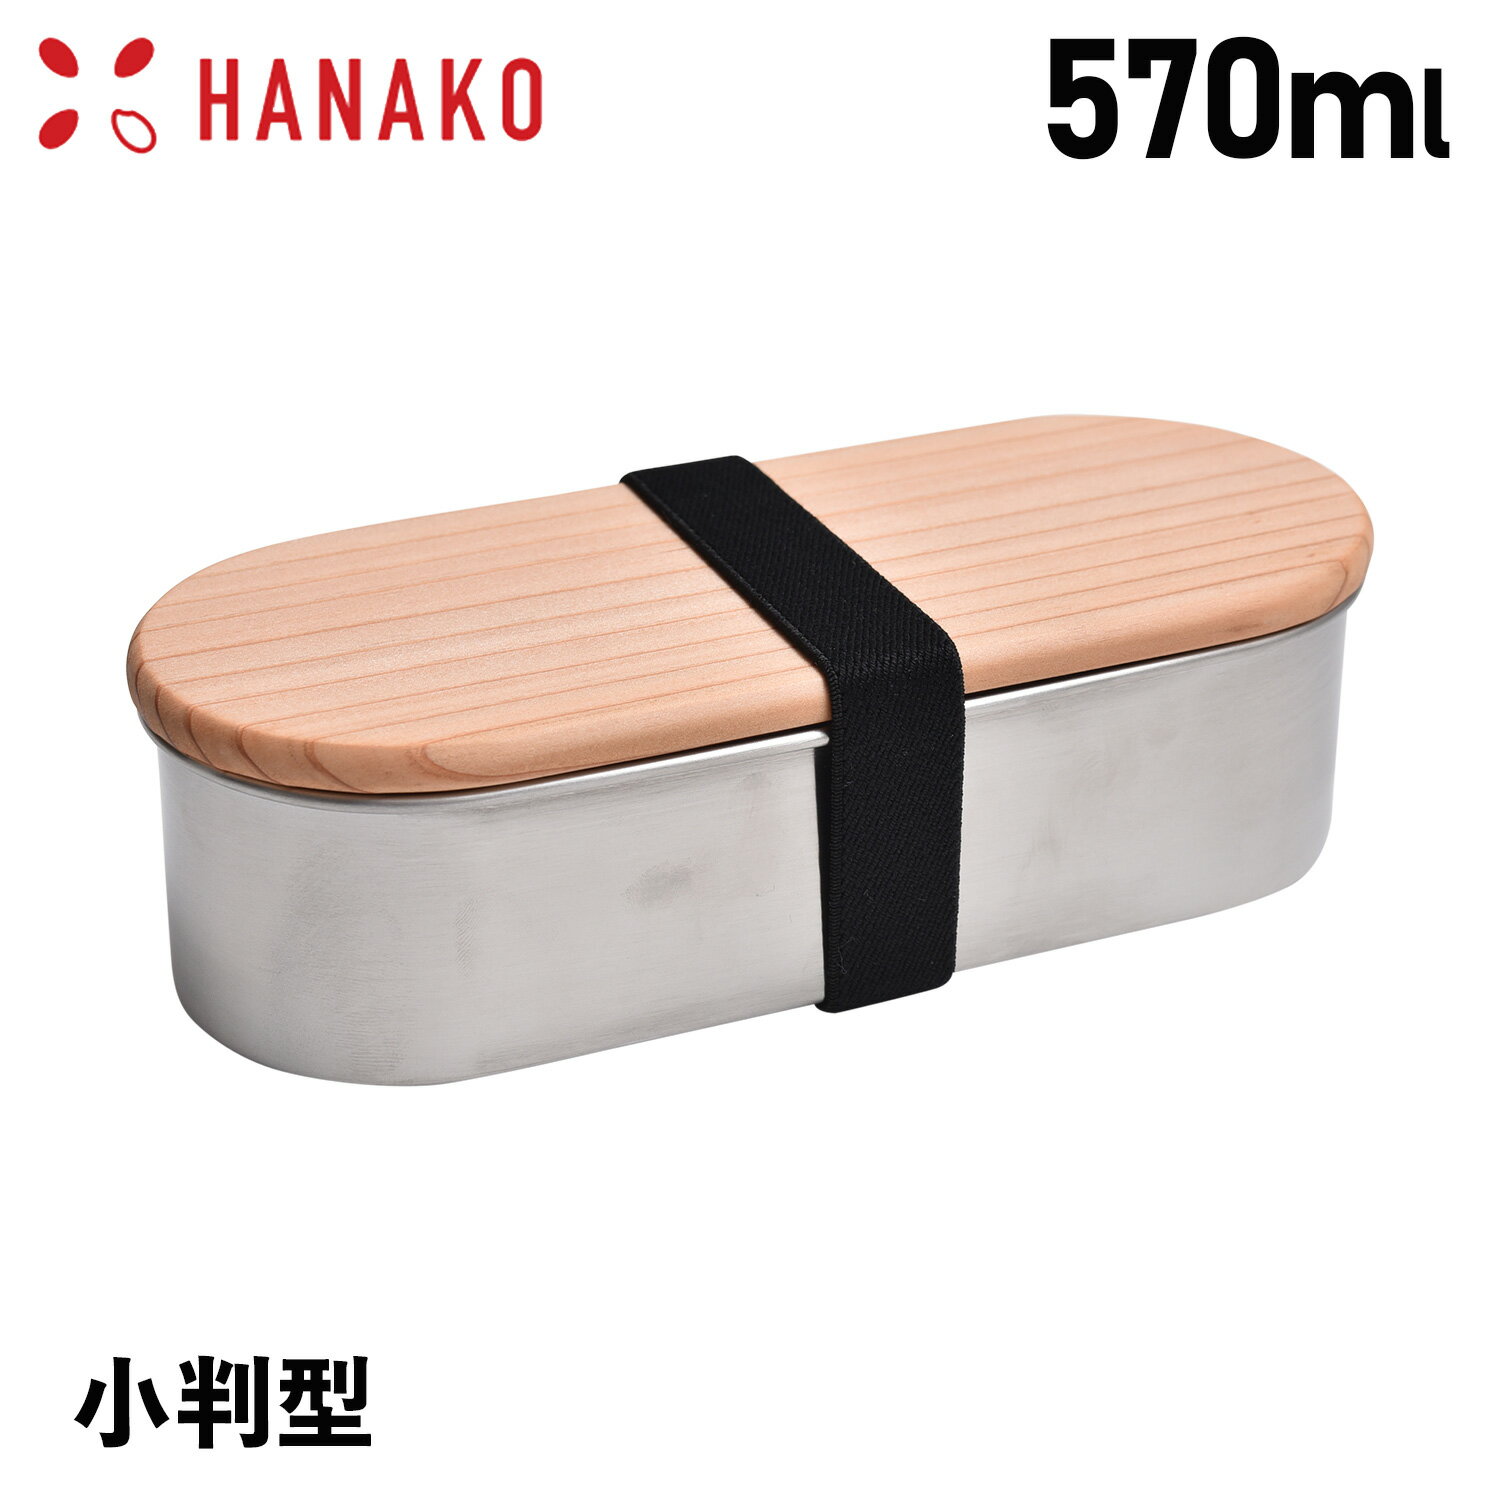 HANAKO ハナコ 弁当箱 ランチボックス 木蓋付きフードボックス ステンレス 570ml 小判型 1段 日本製 FOOD BOX STAINLESS シルバー 62032